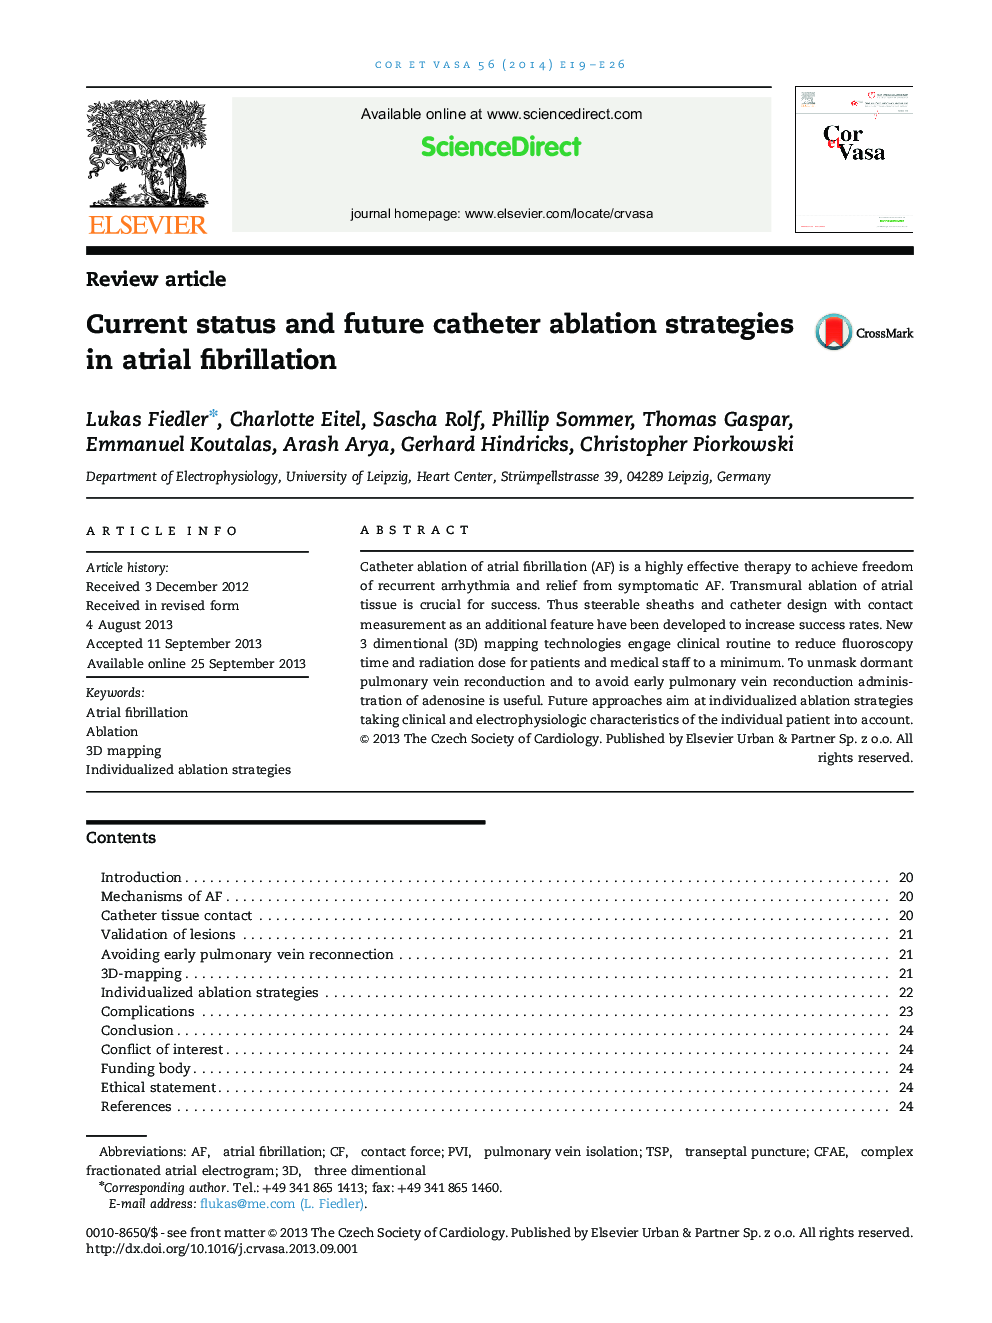 Current status and future catheter ablation strategies in atrial fibrillation